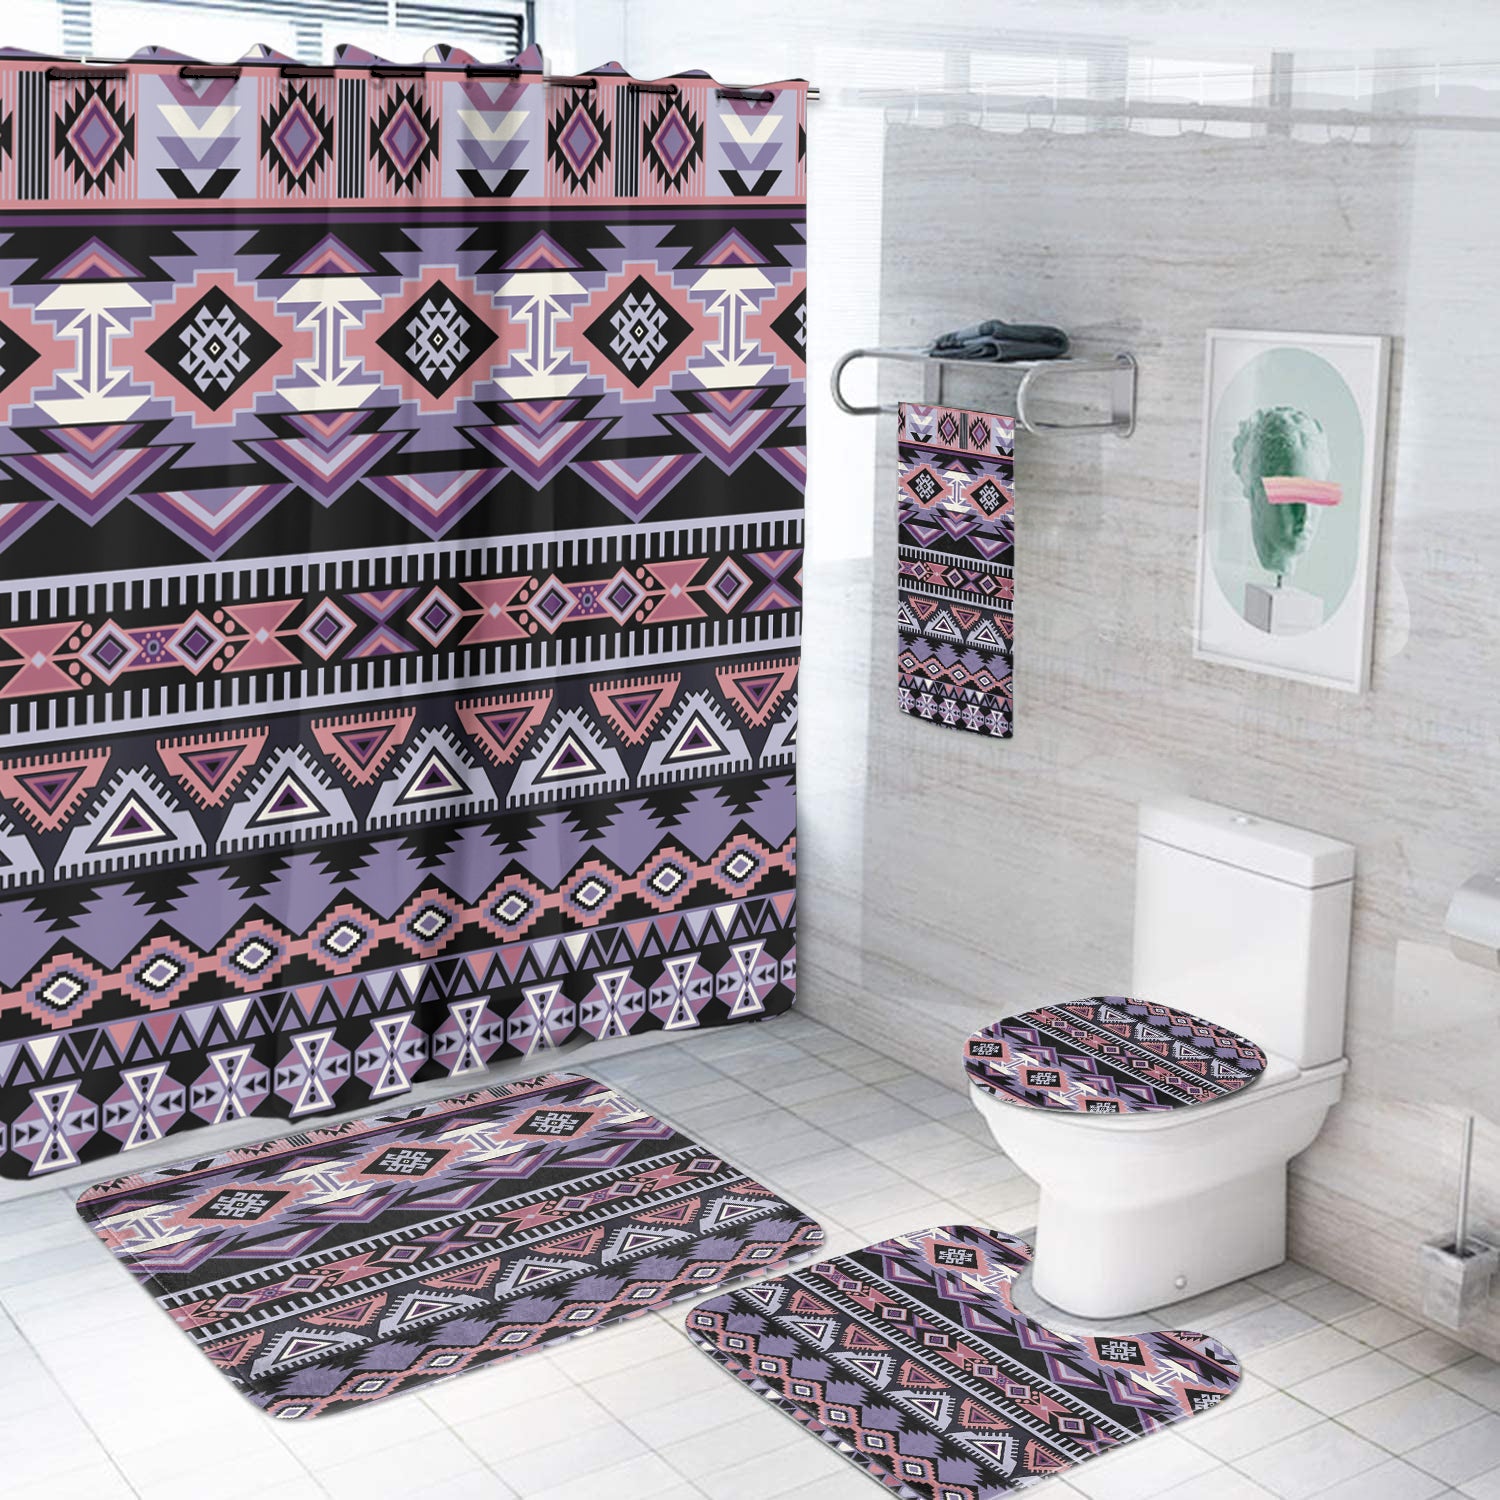 Powwow Store gb nat00593 ethnic pattern bathroom set